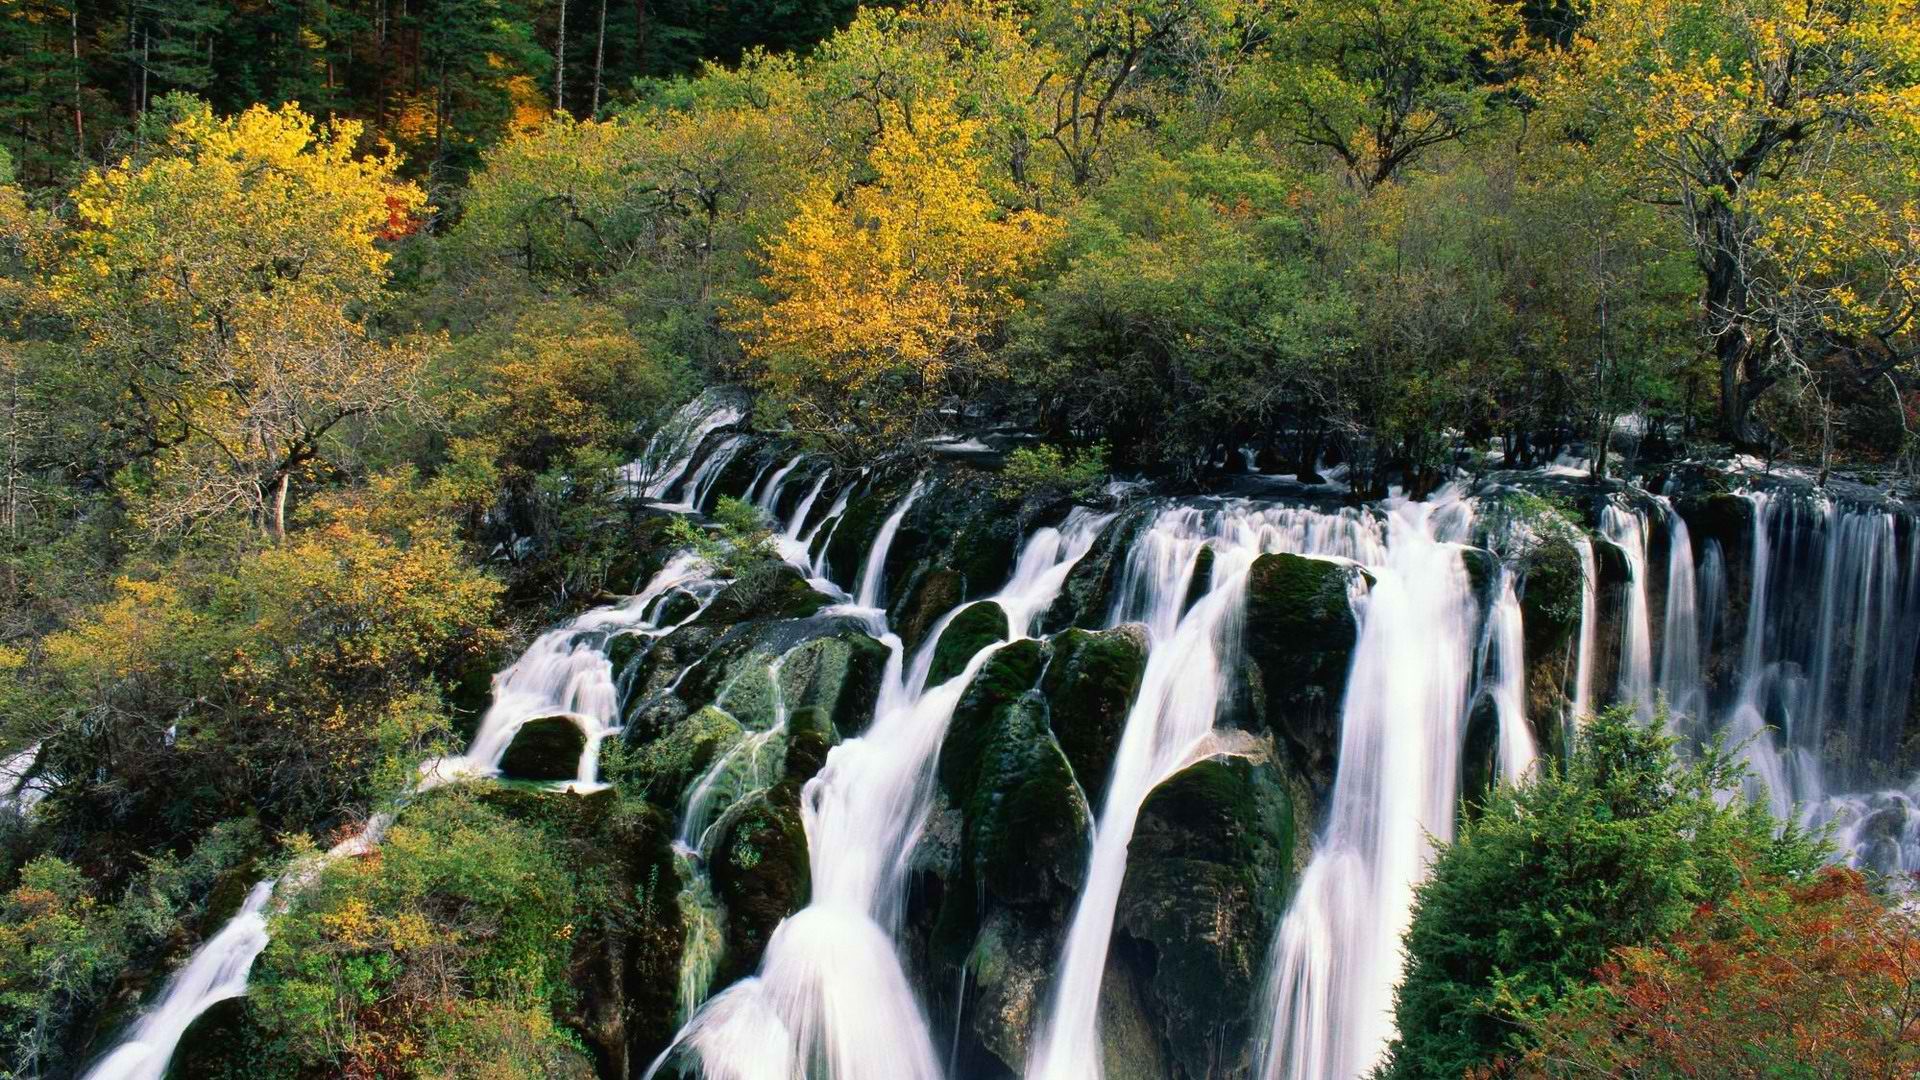 China, valleys, villages, waterfalls - desktop wallpaper